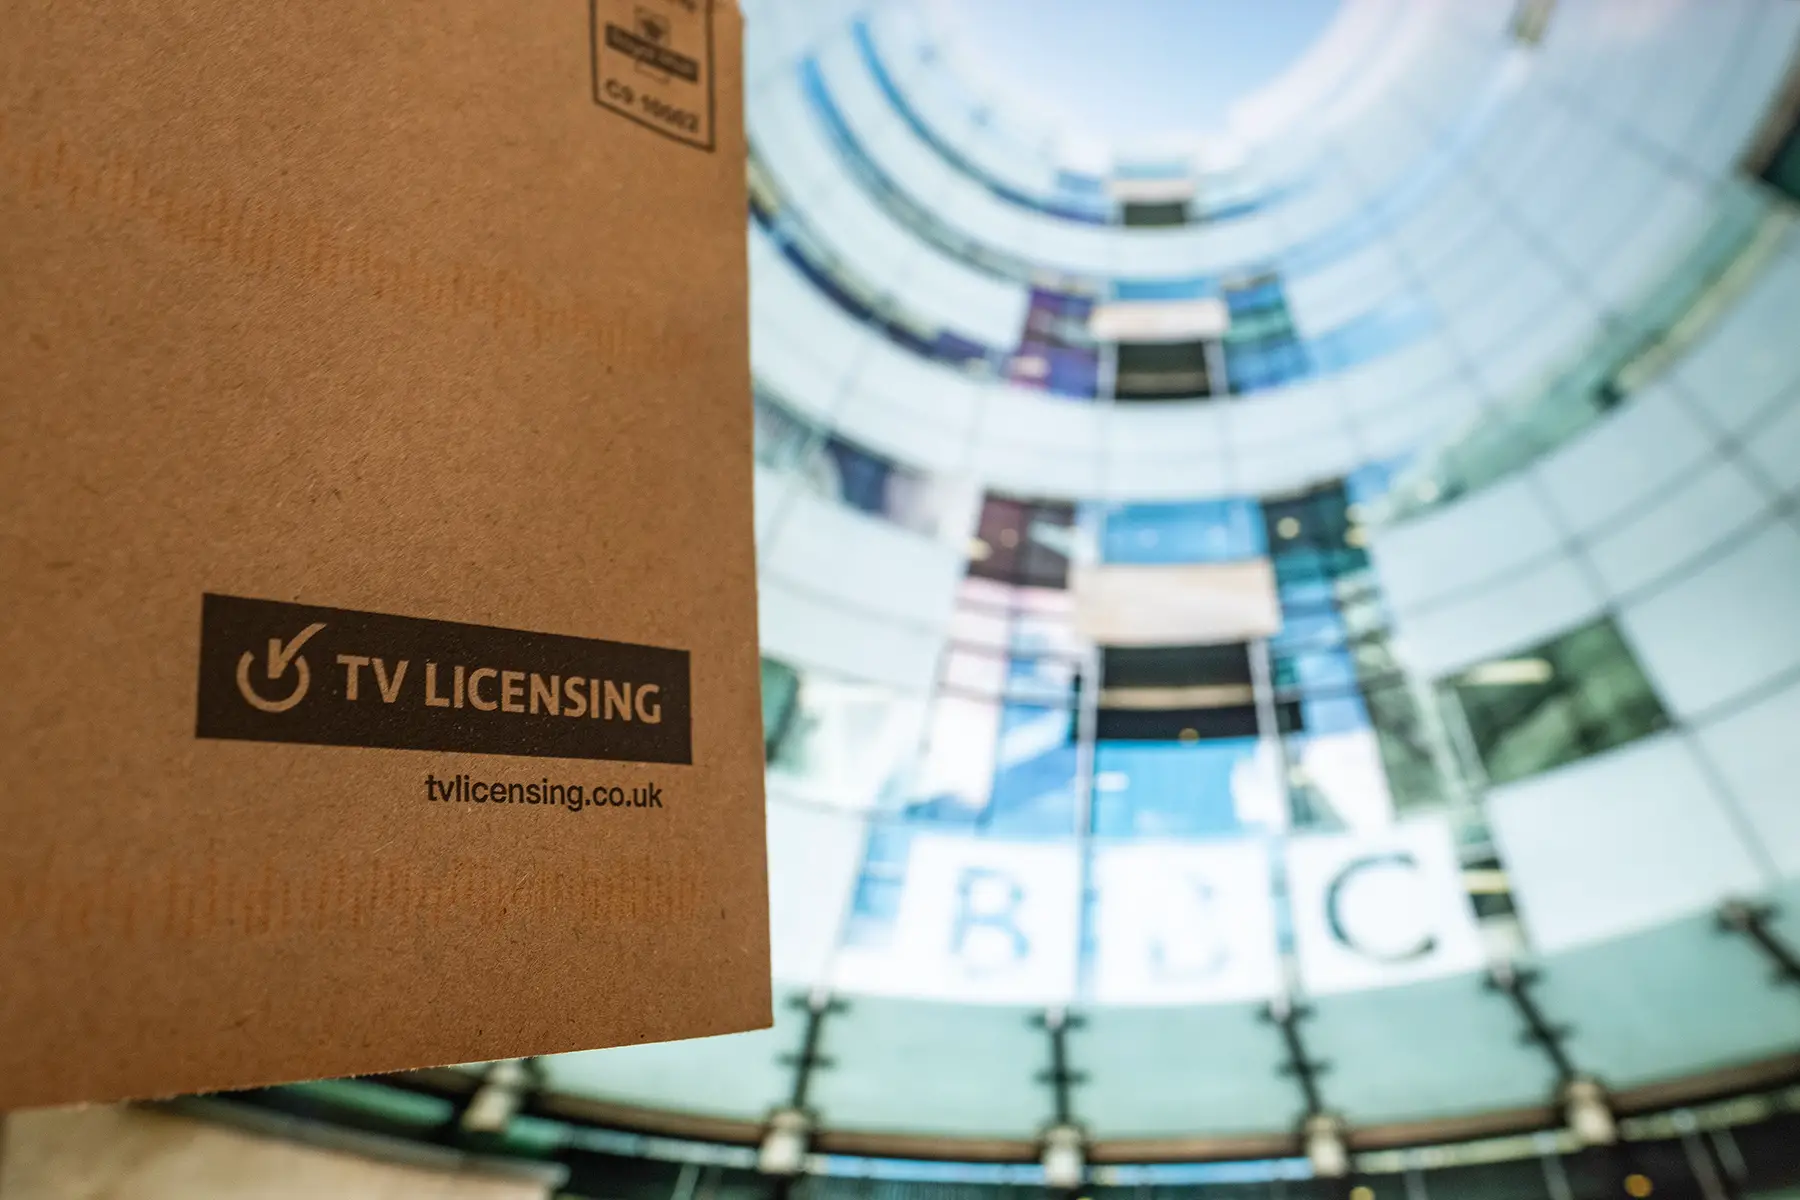 A letter regarding the UK's TV licensing scheme